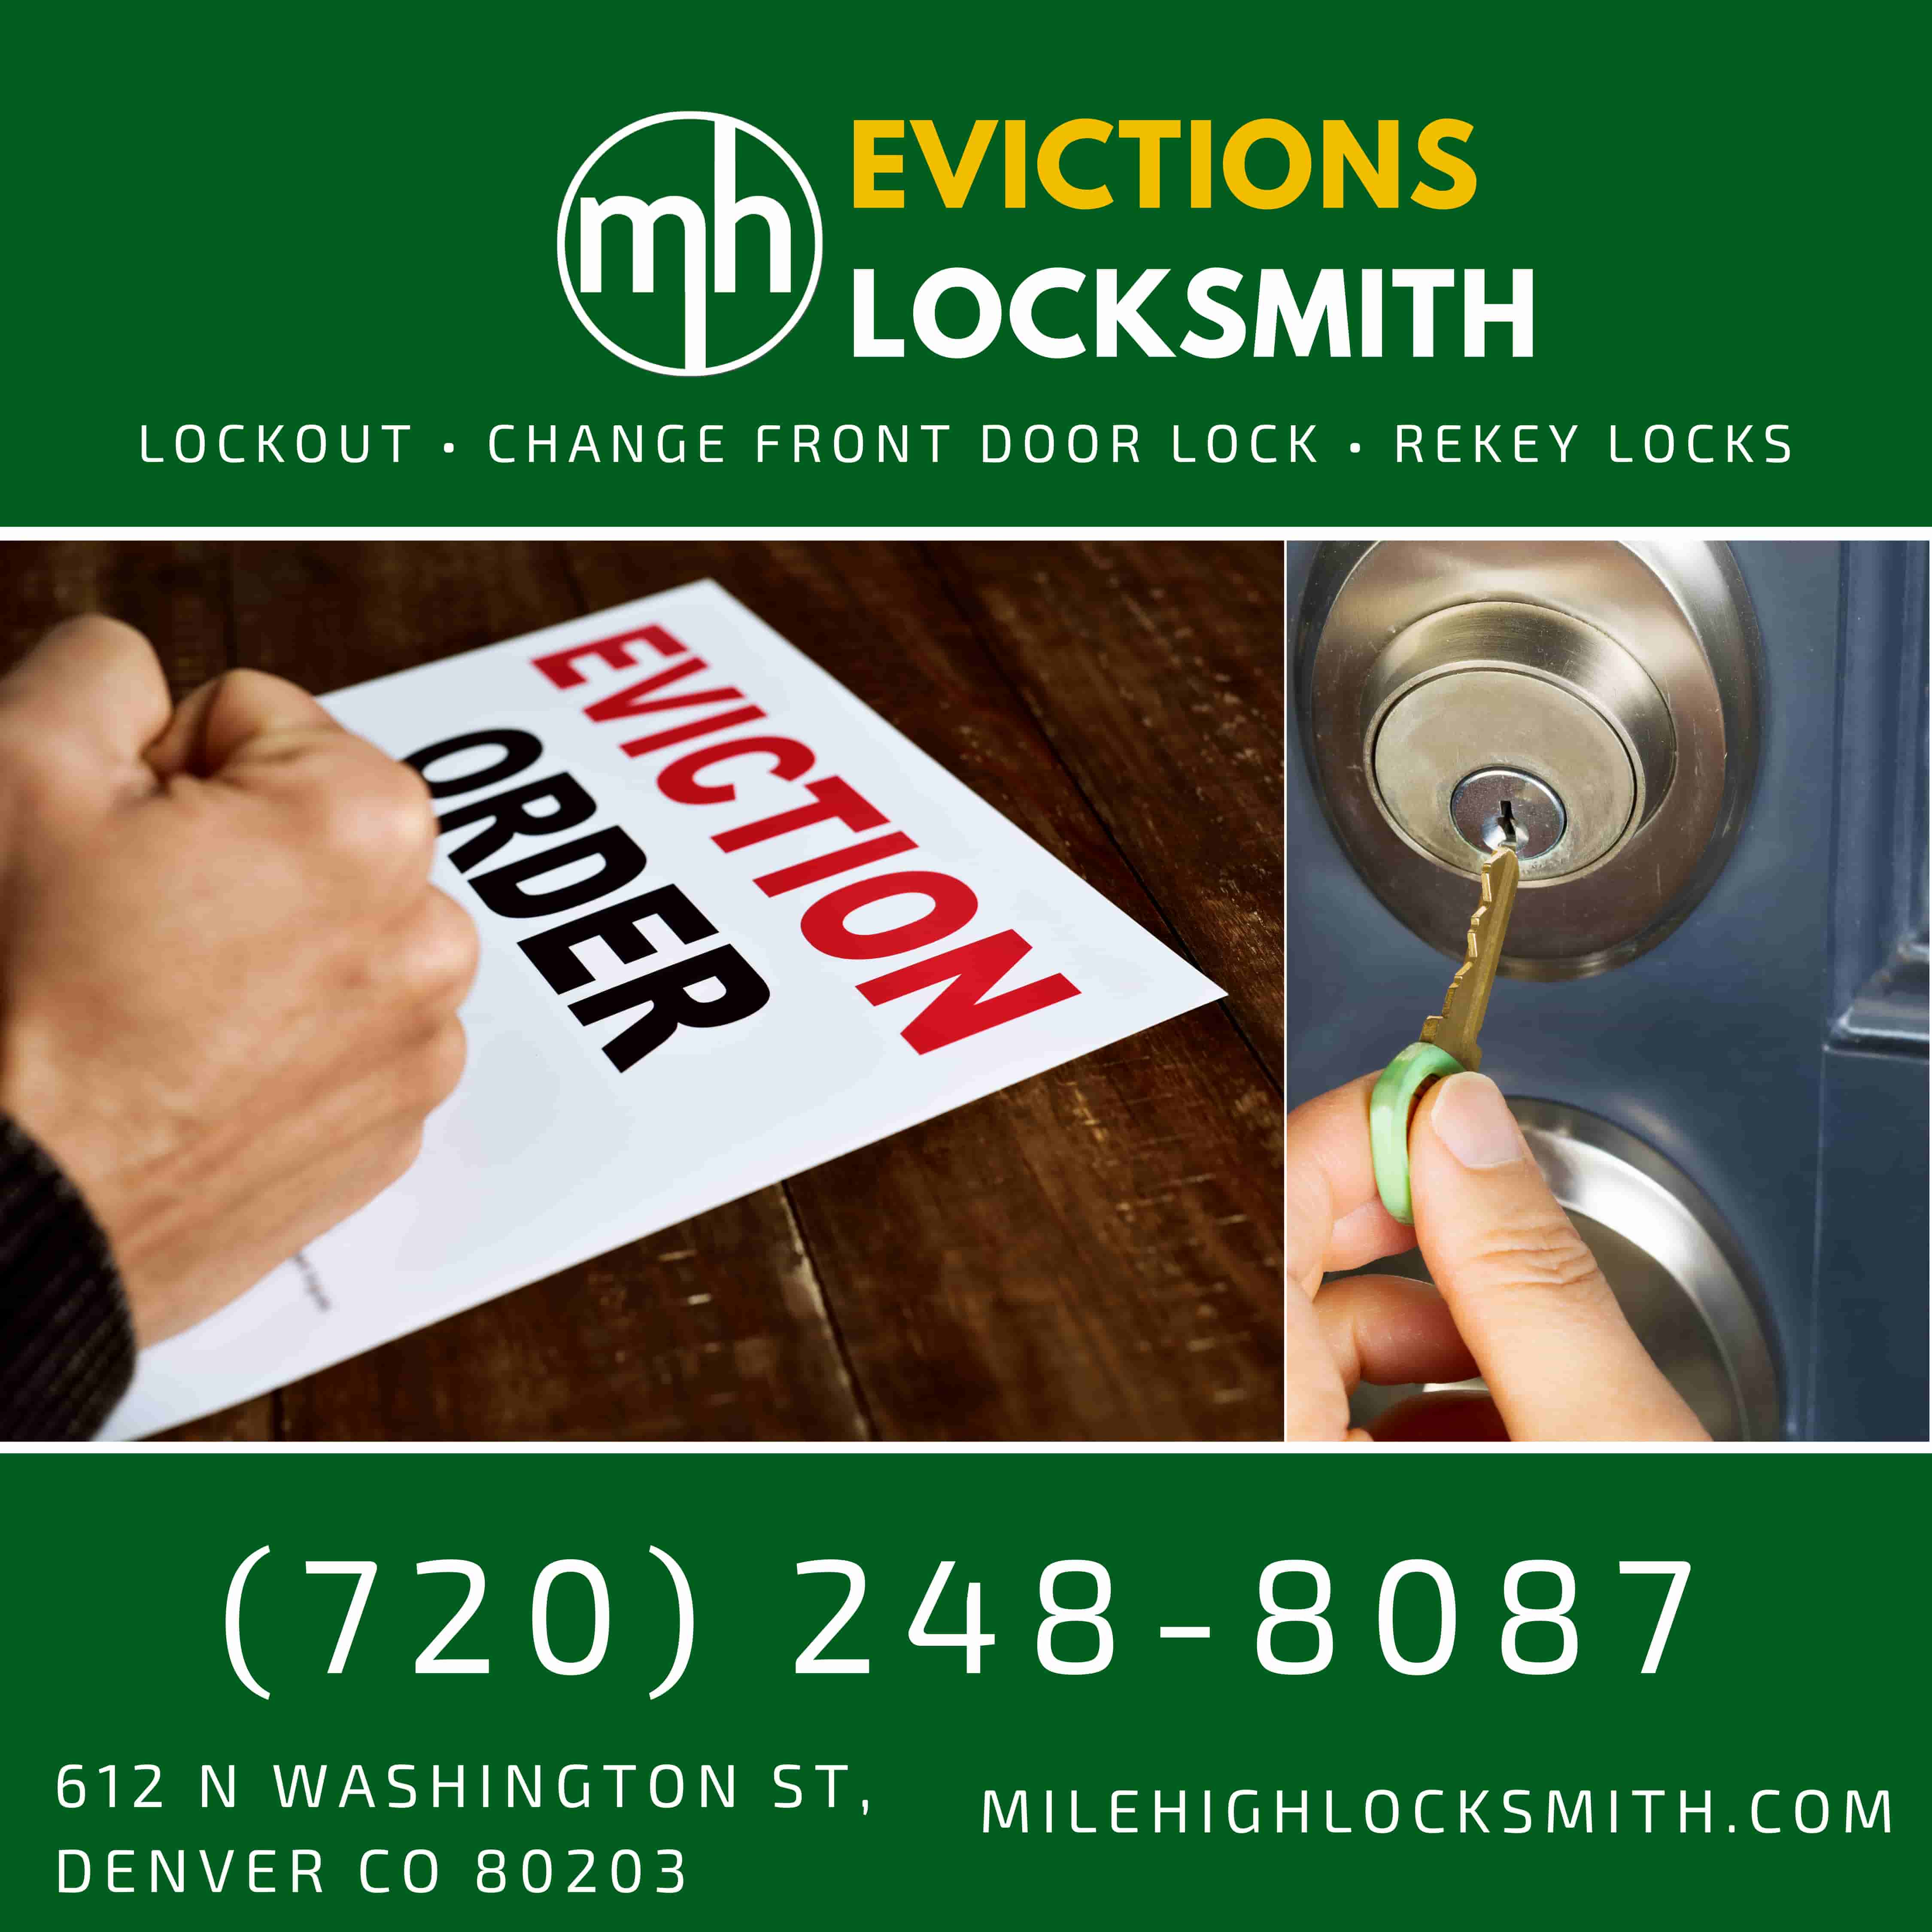 Eviction Locksmith Services